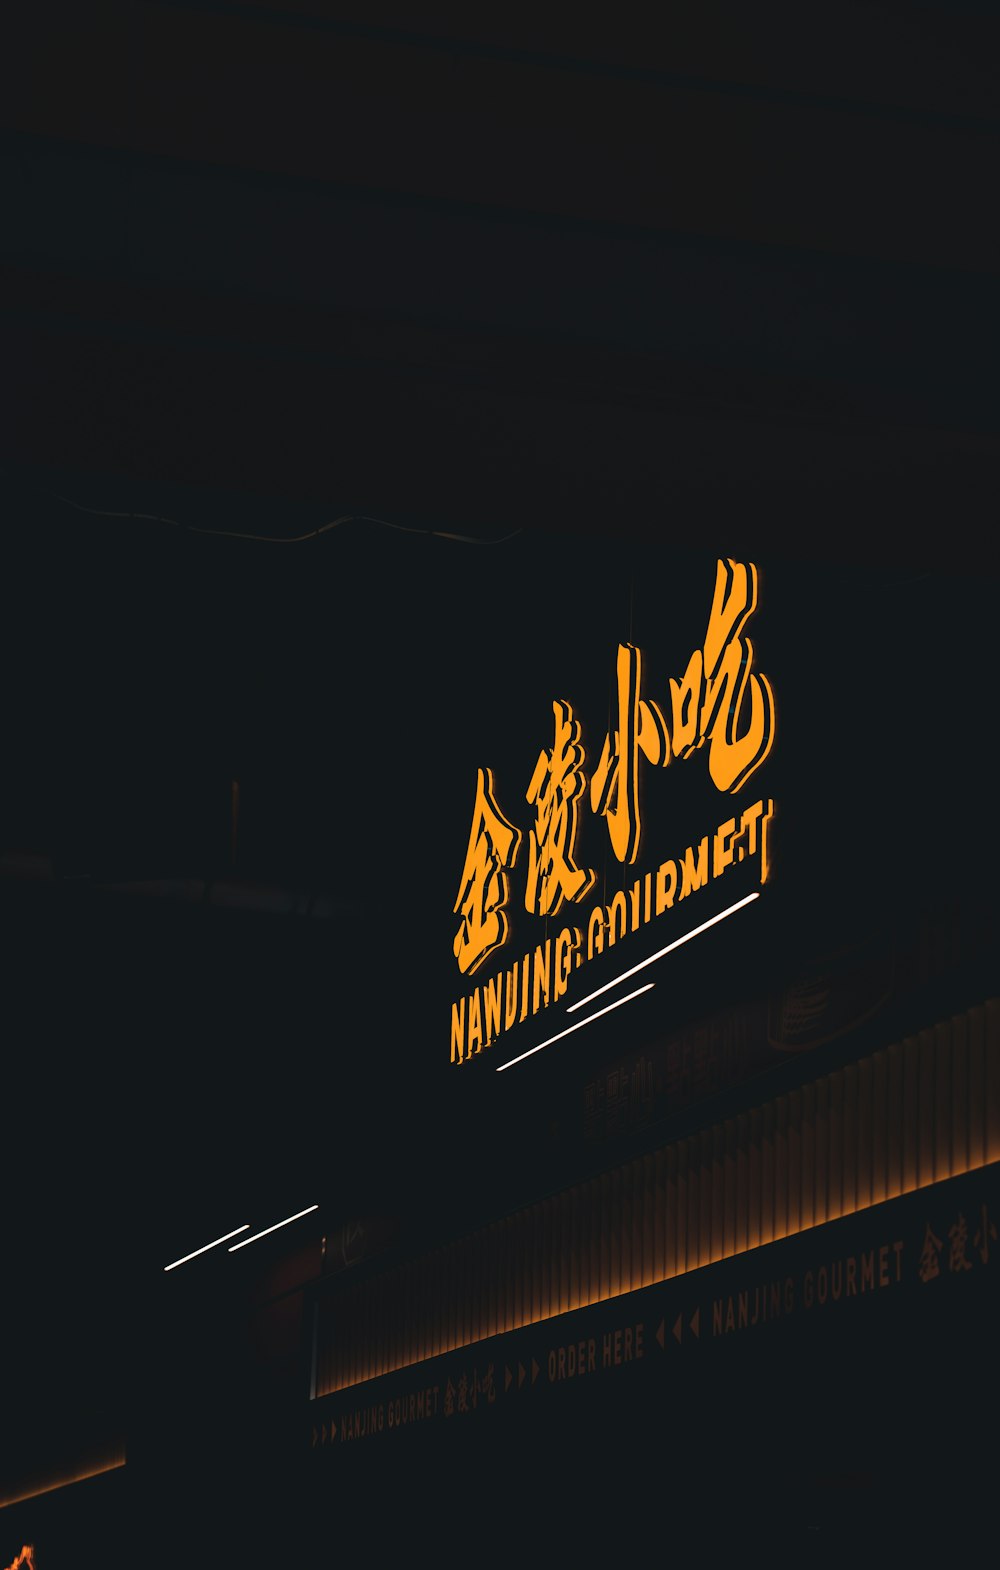 a restaurant sign lit up in the dark